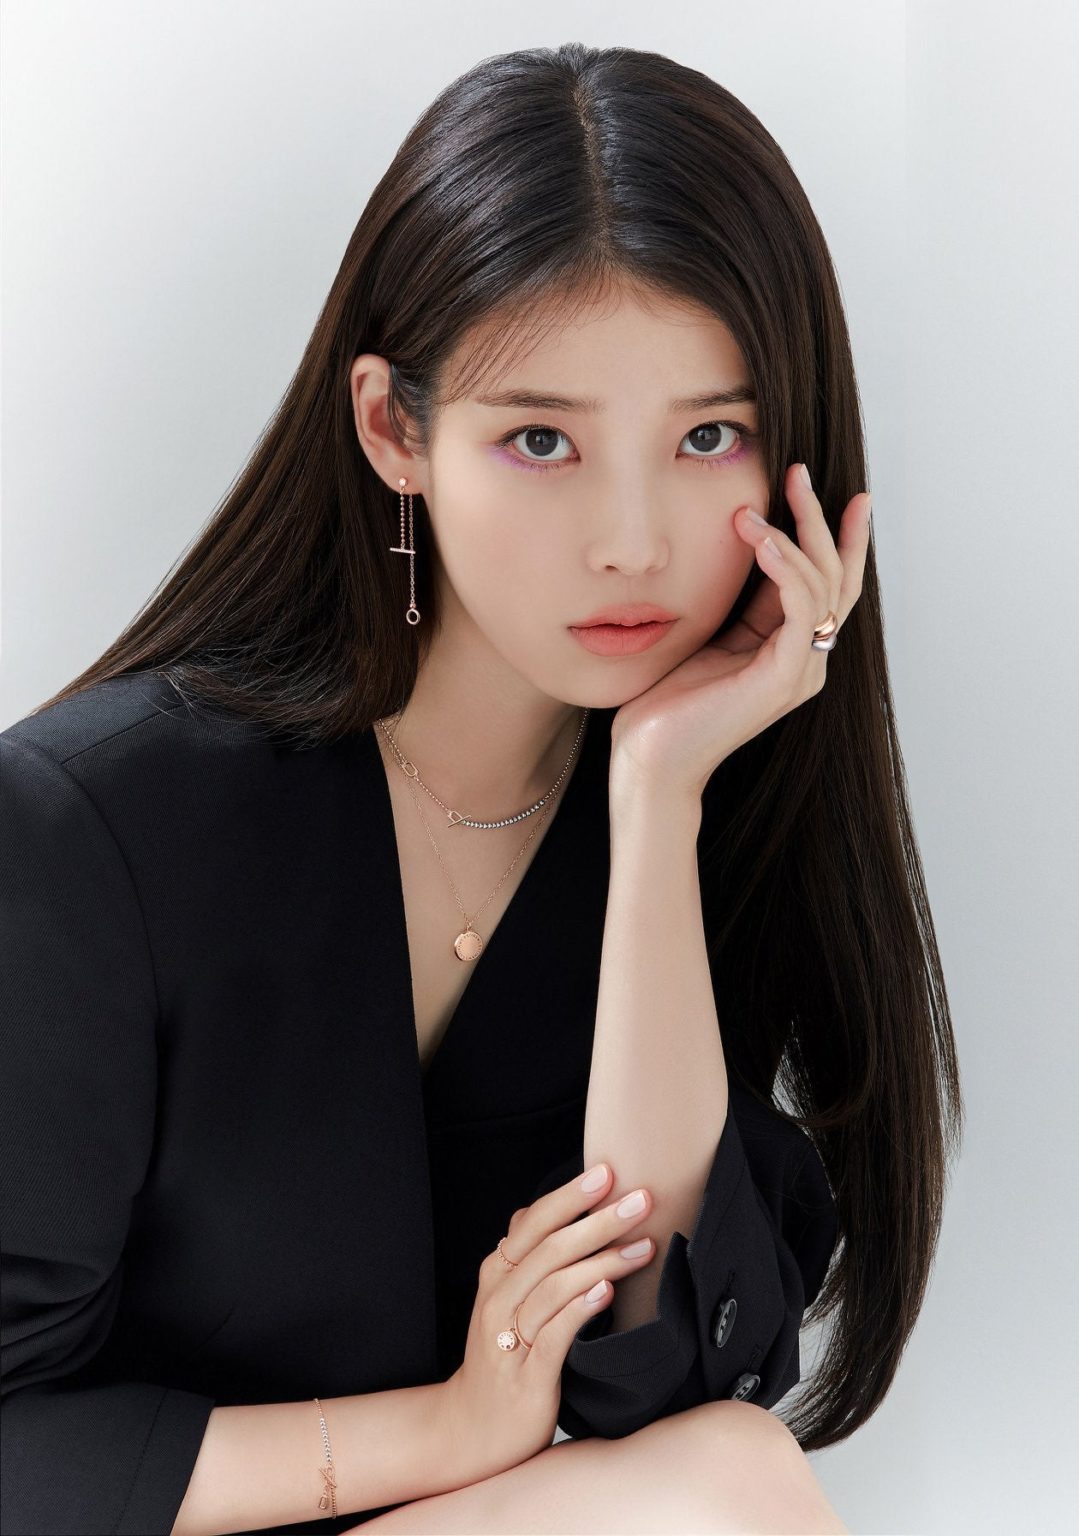 Top 10 Most Beautiful Korean Actresses According To Kpopmap Readers ...